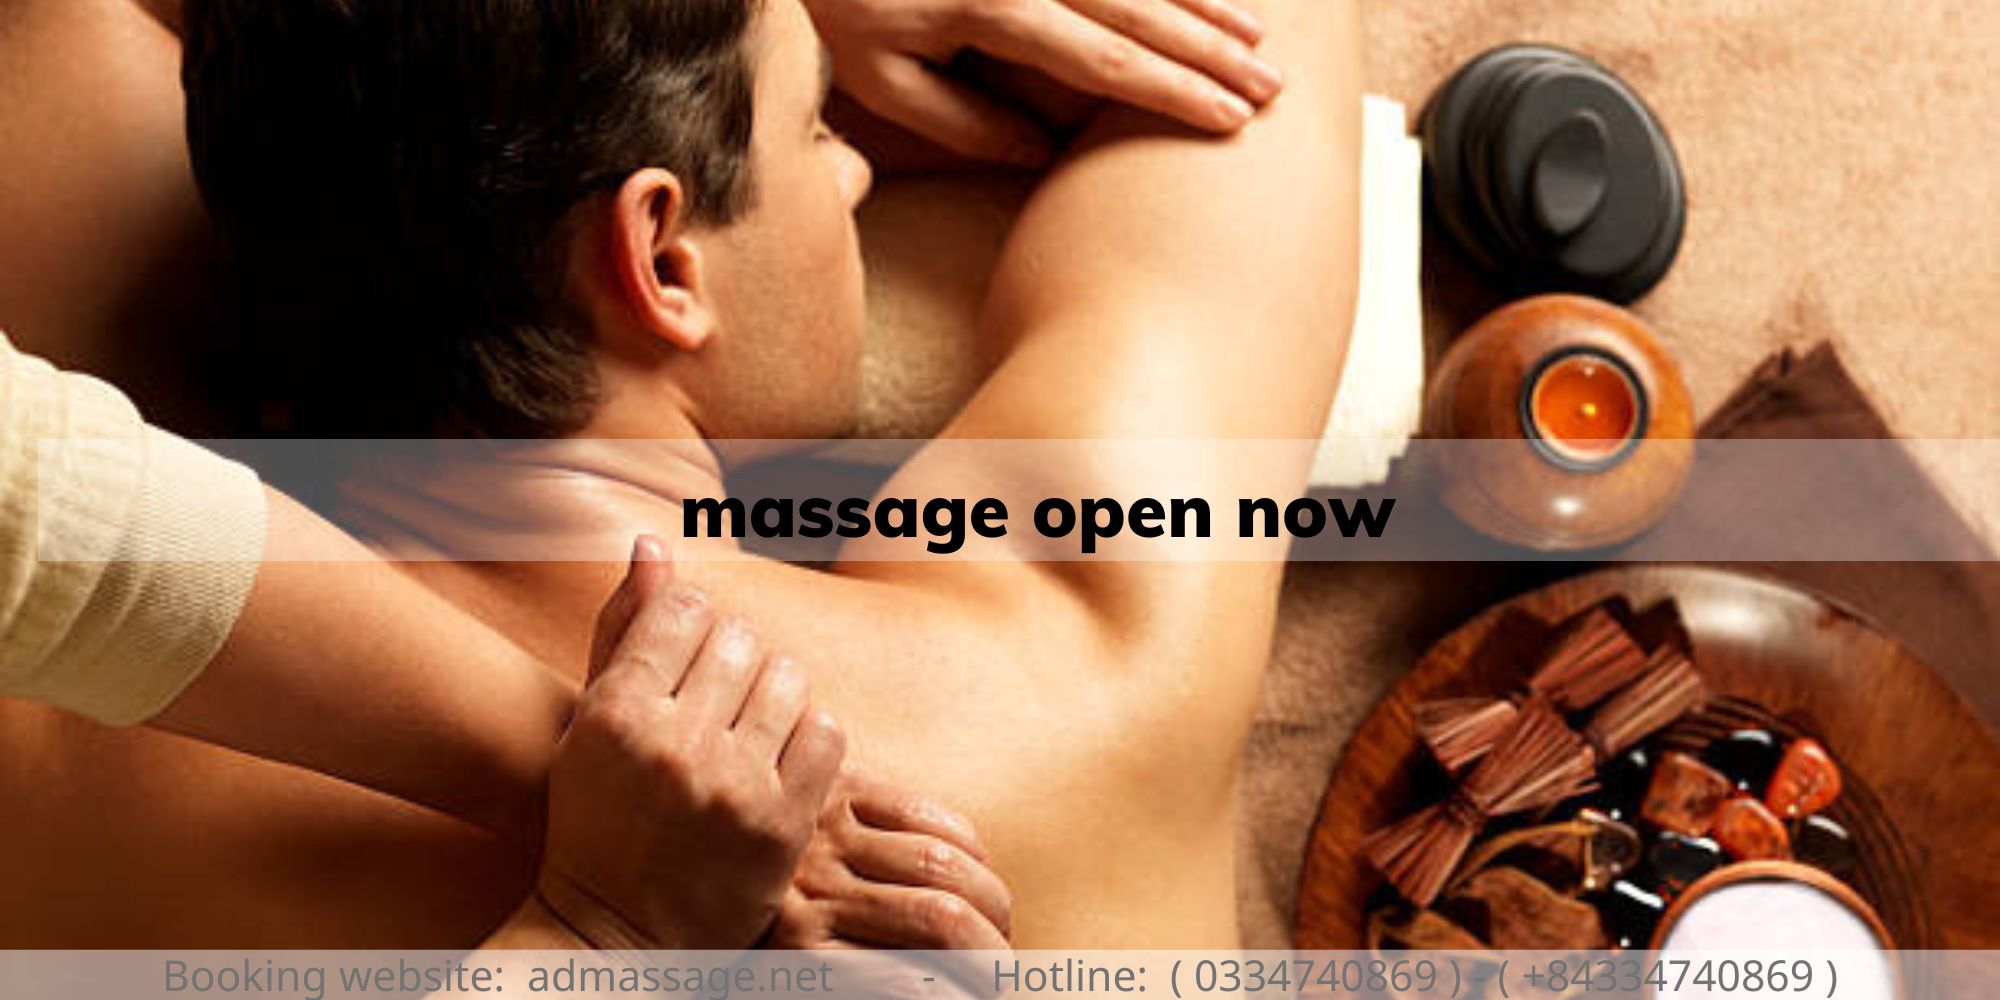 massage open now